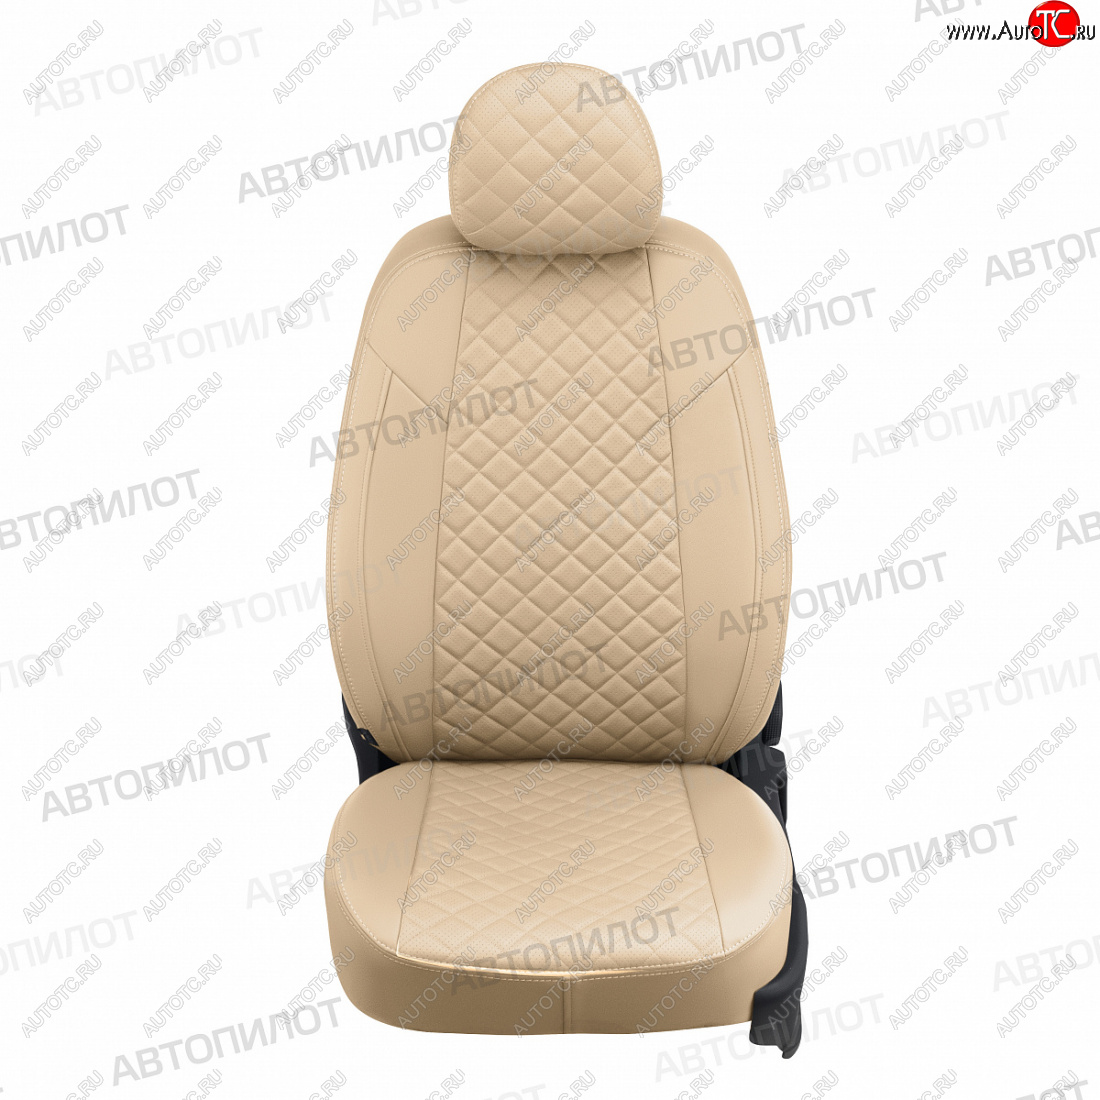 7 799 р. Чехлы сидений (экокожа, зад. сид. 40/60) Автопилот Ромб  Hyundai Getz  TB (2002-2010) (бежевый)